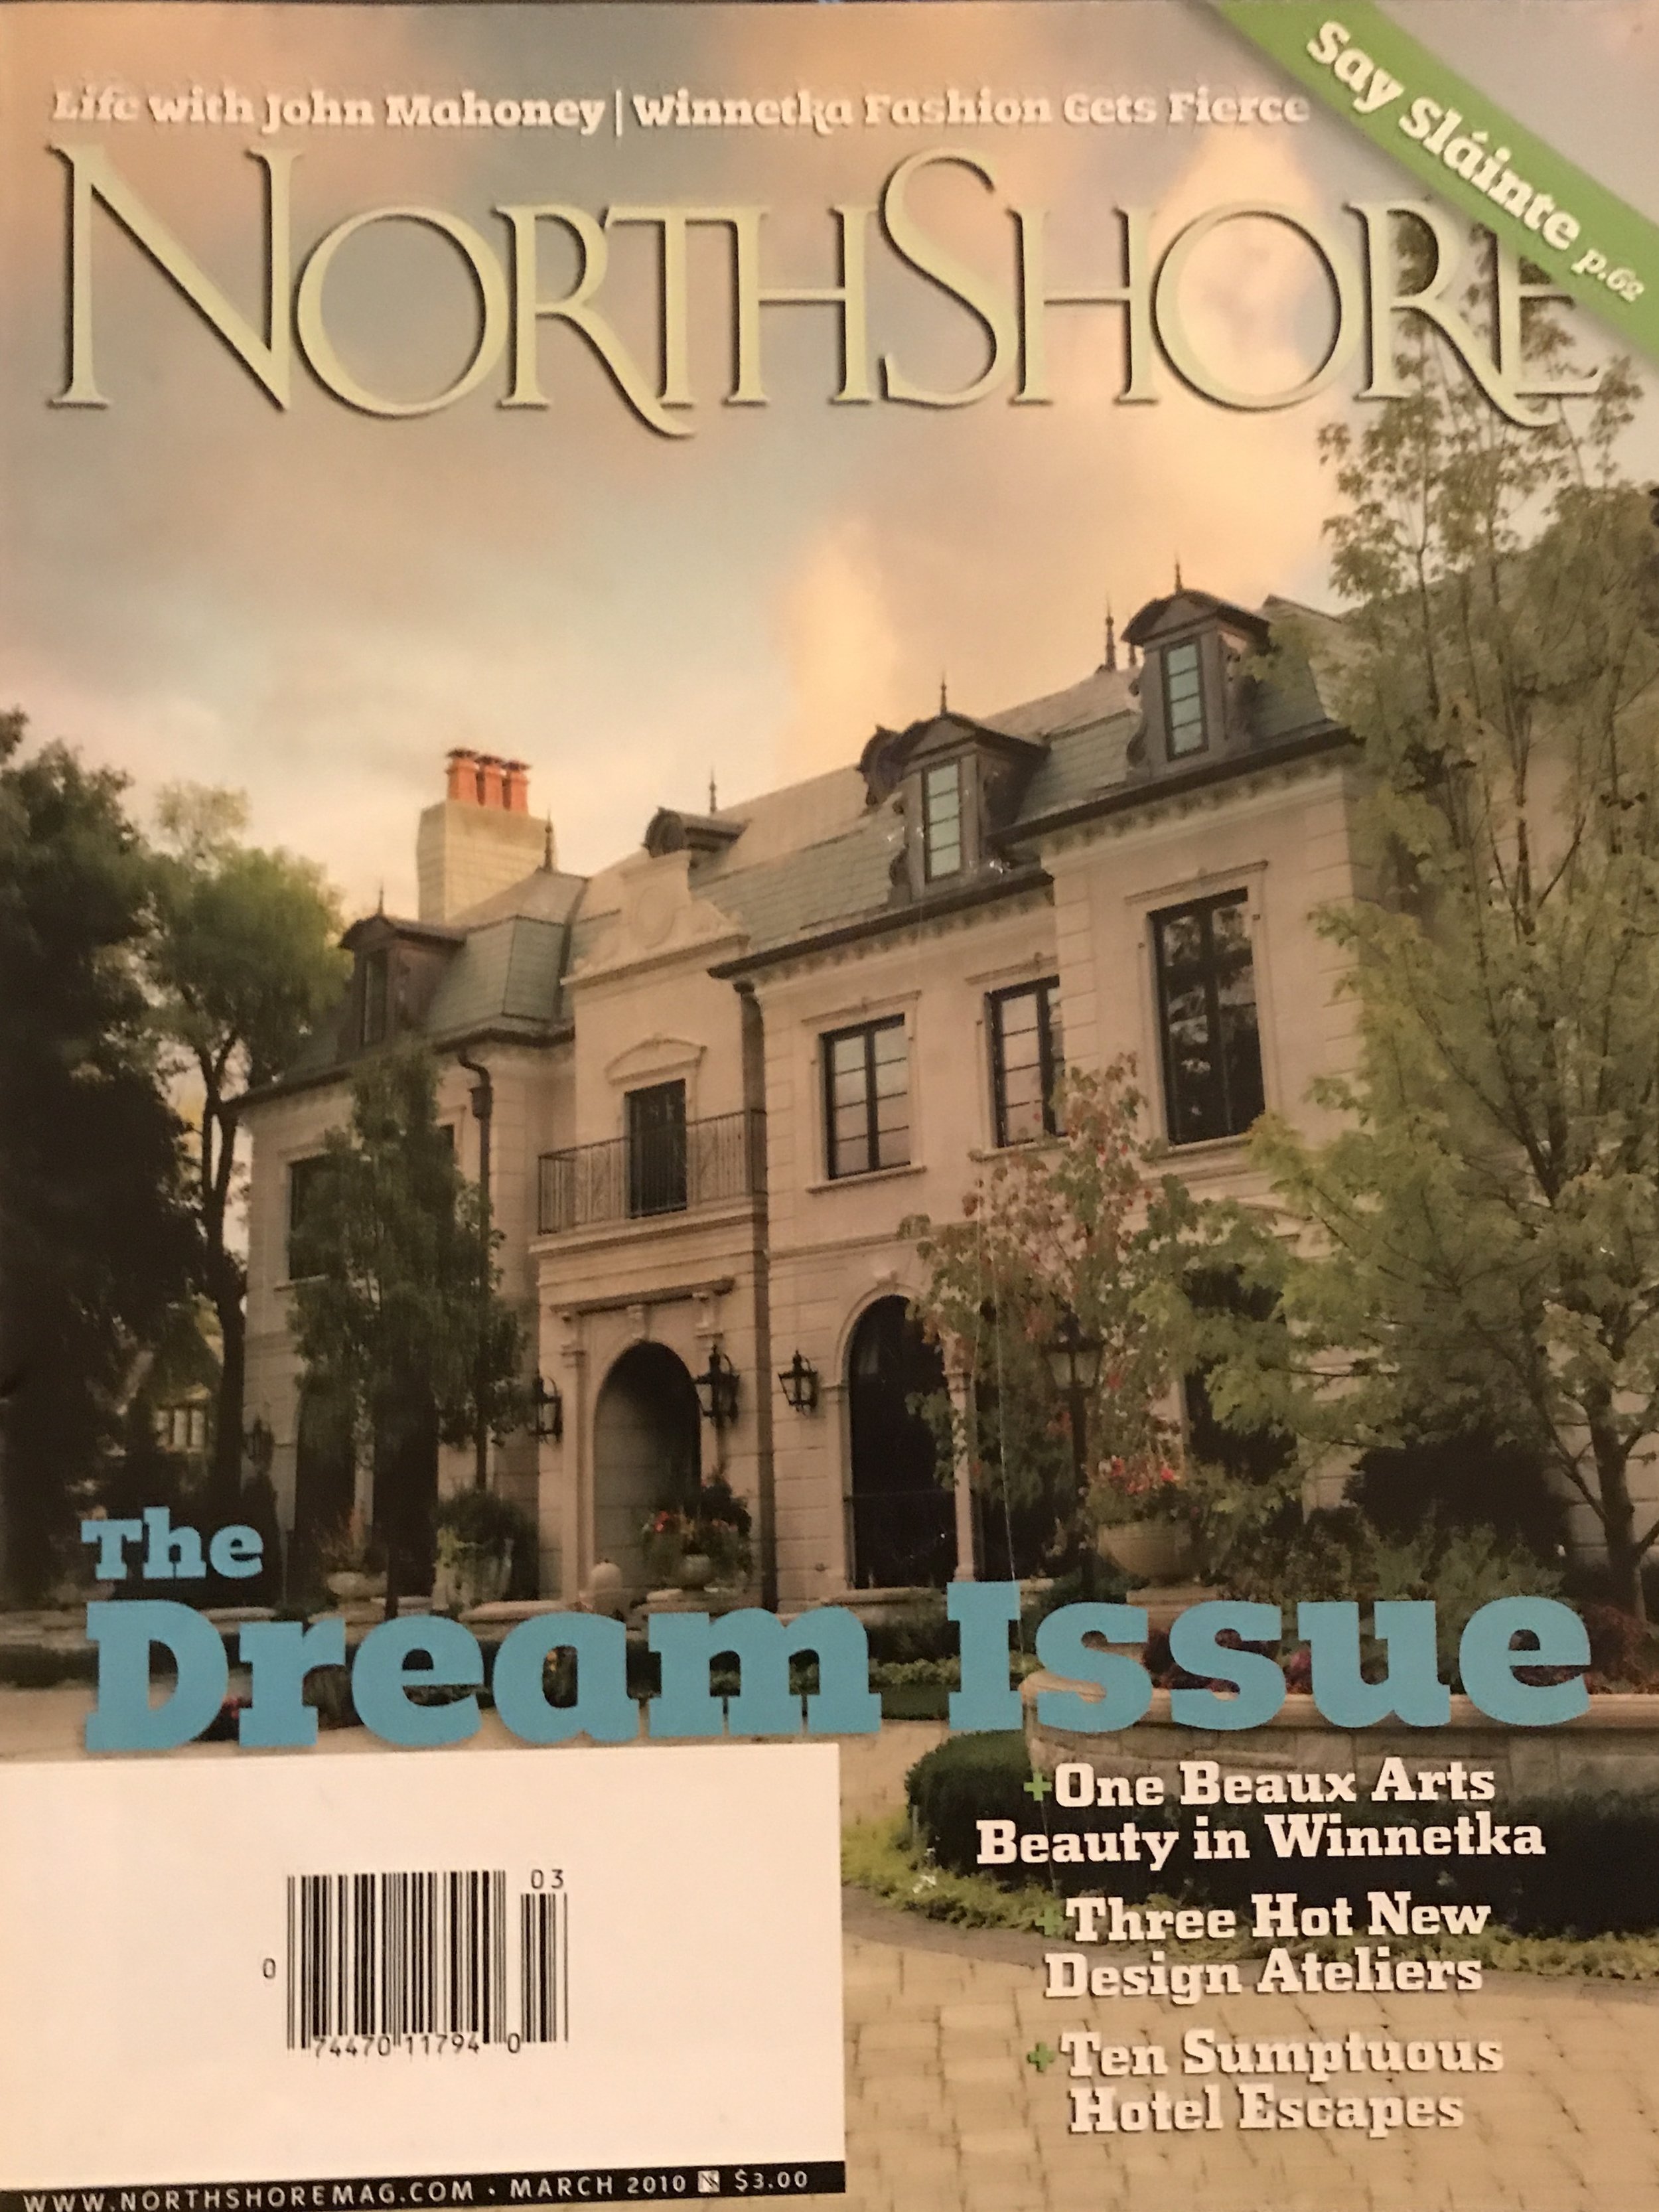 Northshore Magazine cover SGE home.jpg